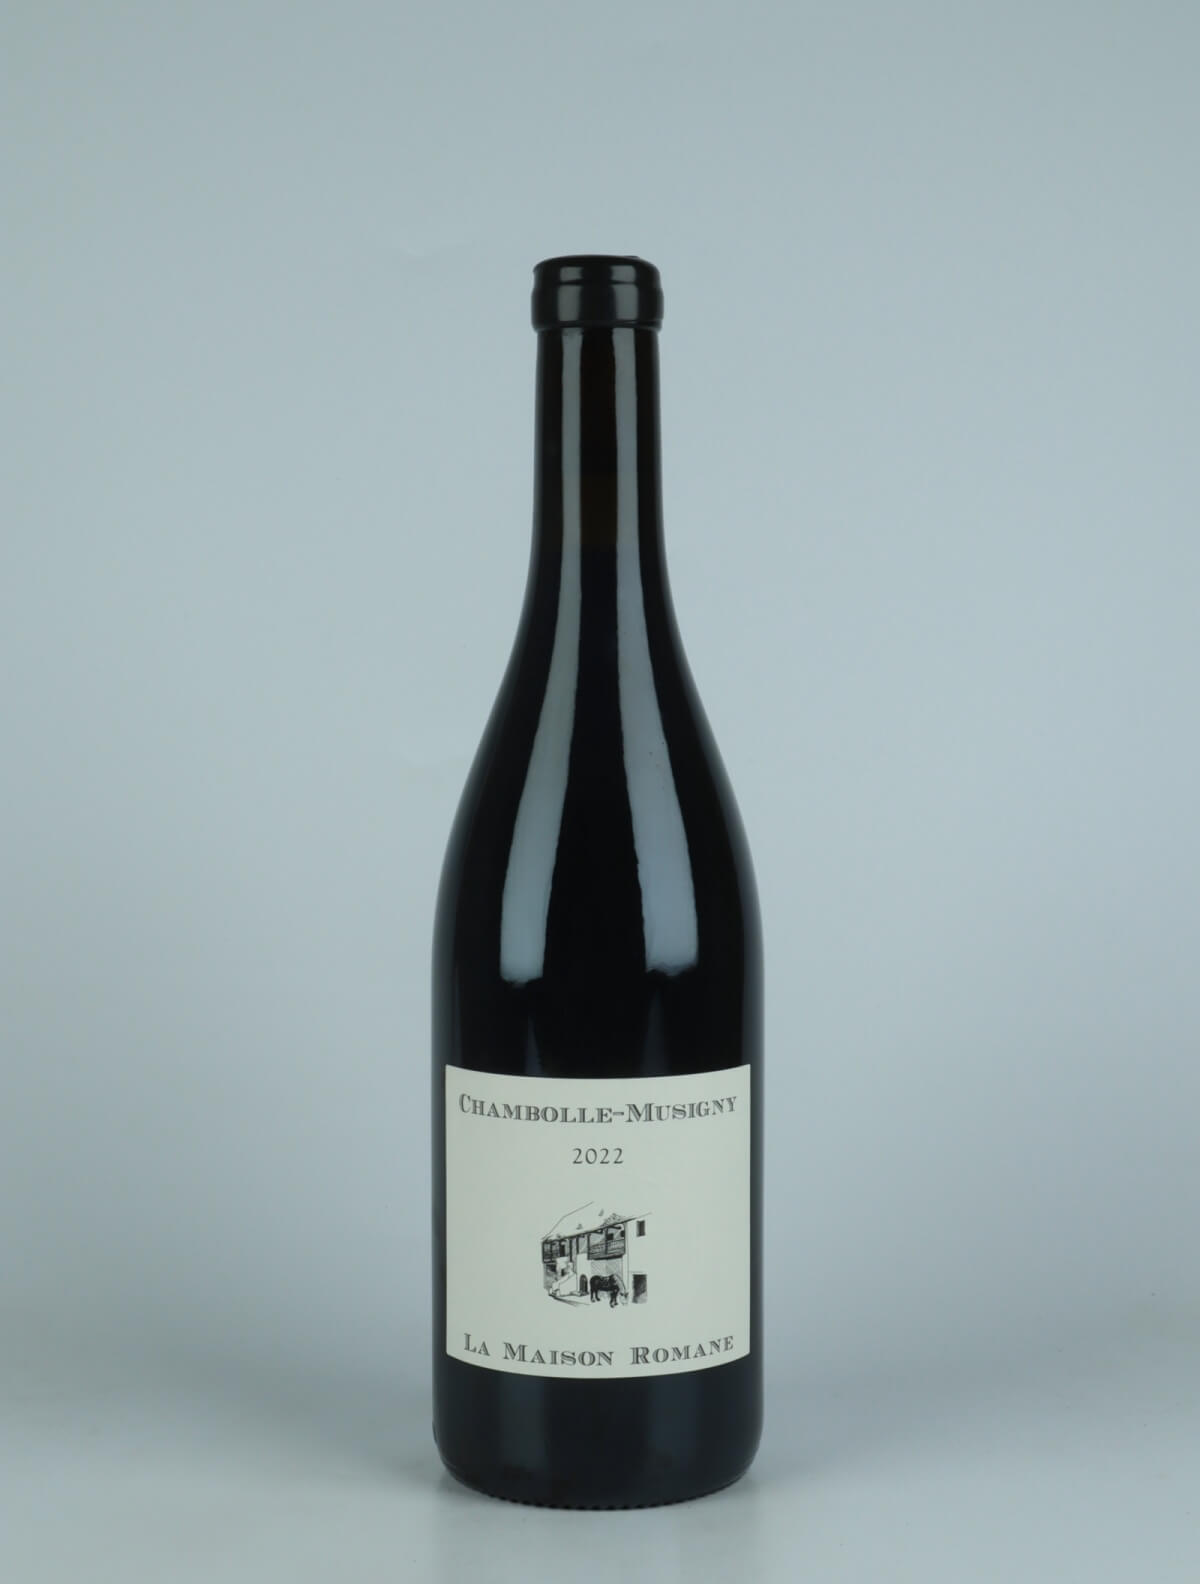 En flaske 2022 Chambolle Musigny Rødvin fra La Maison Romane, Bourgogne i Frankrig